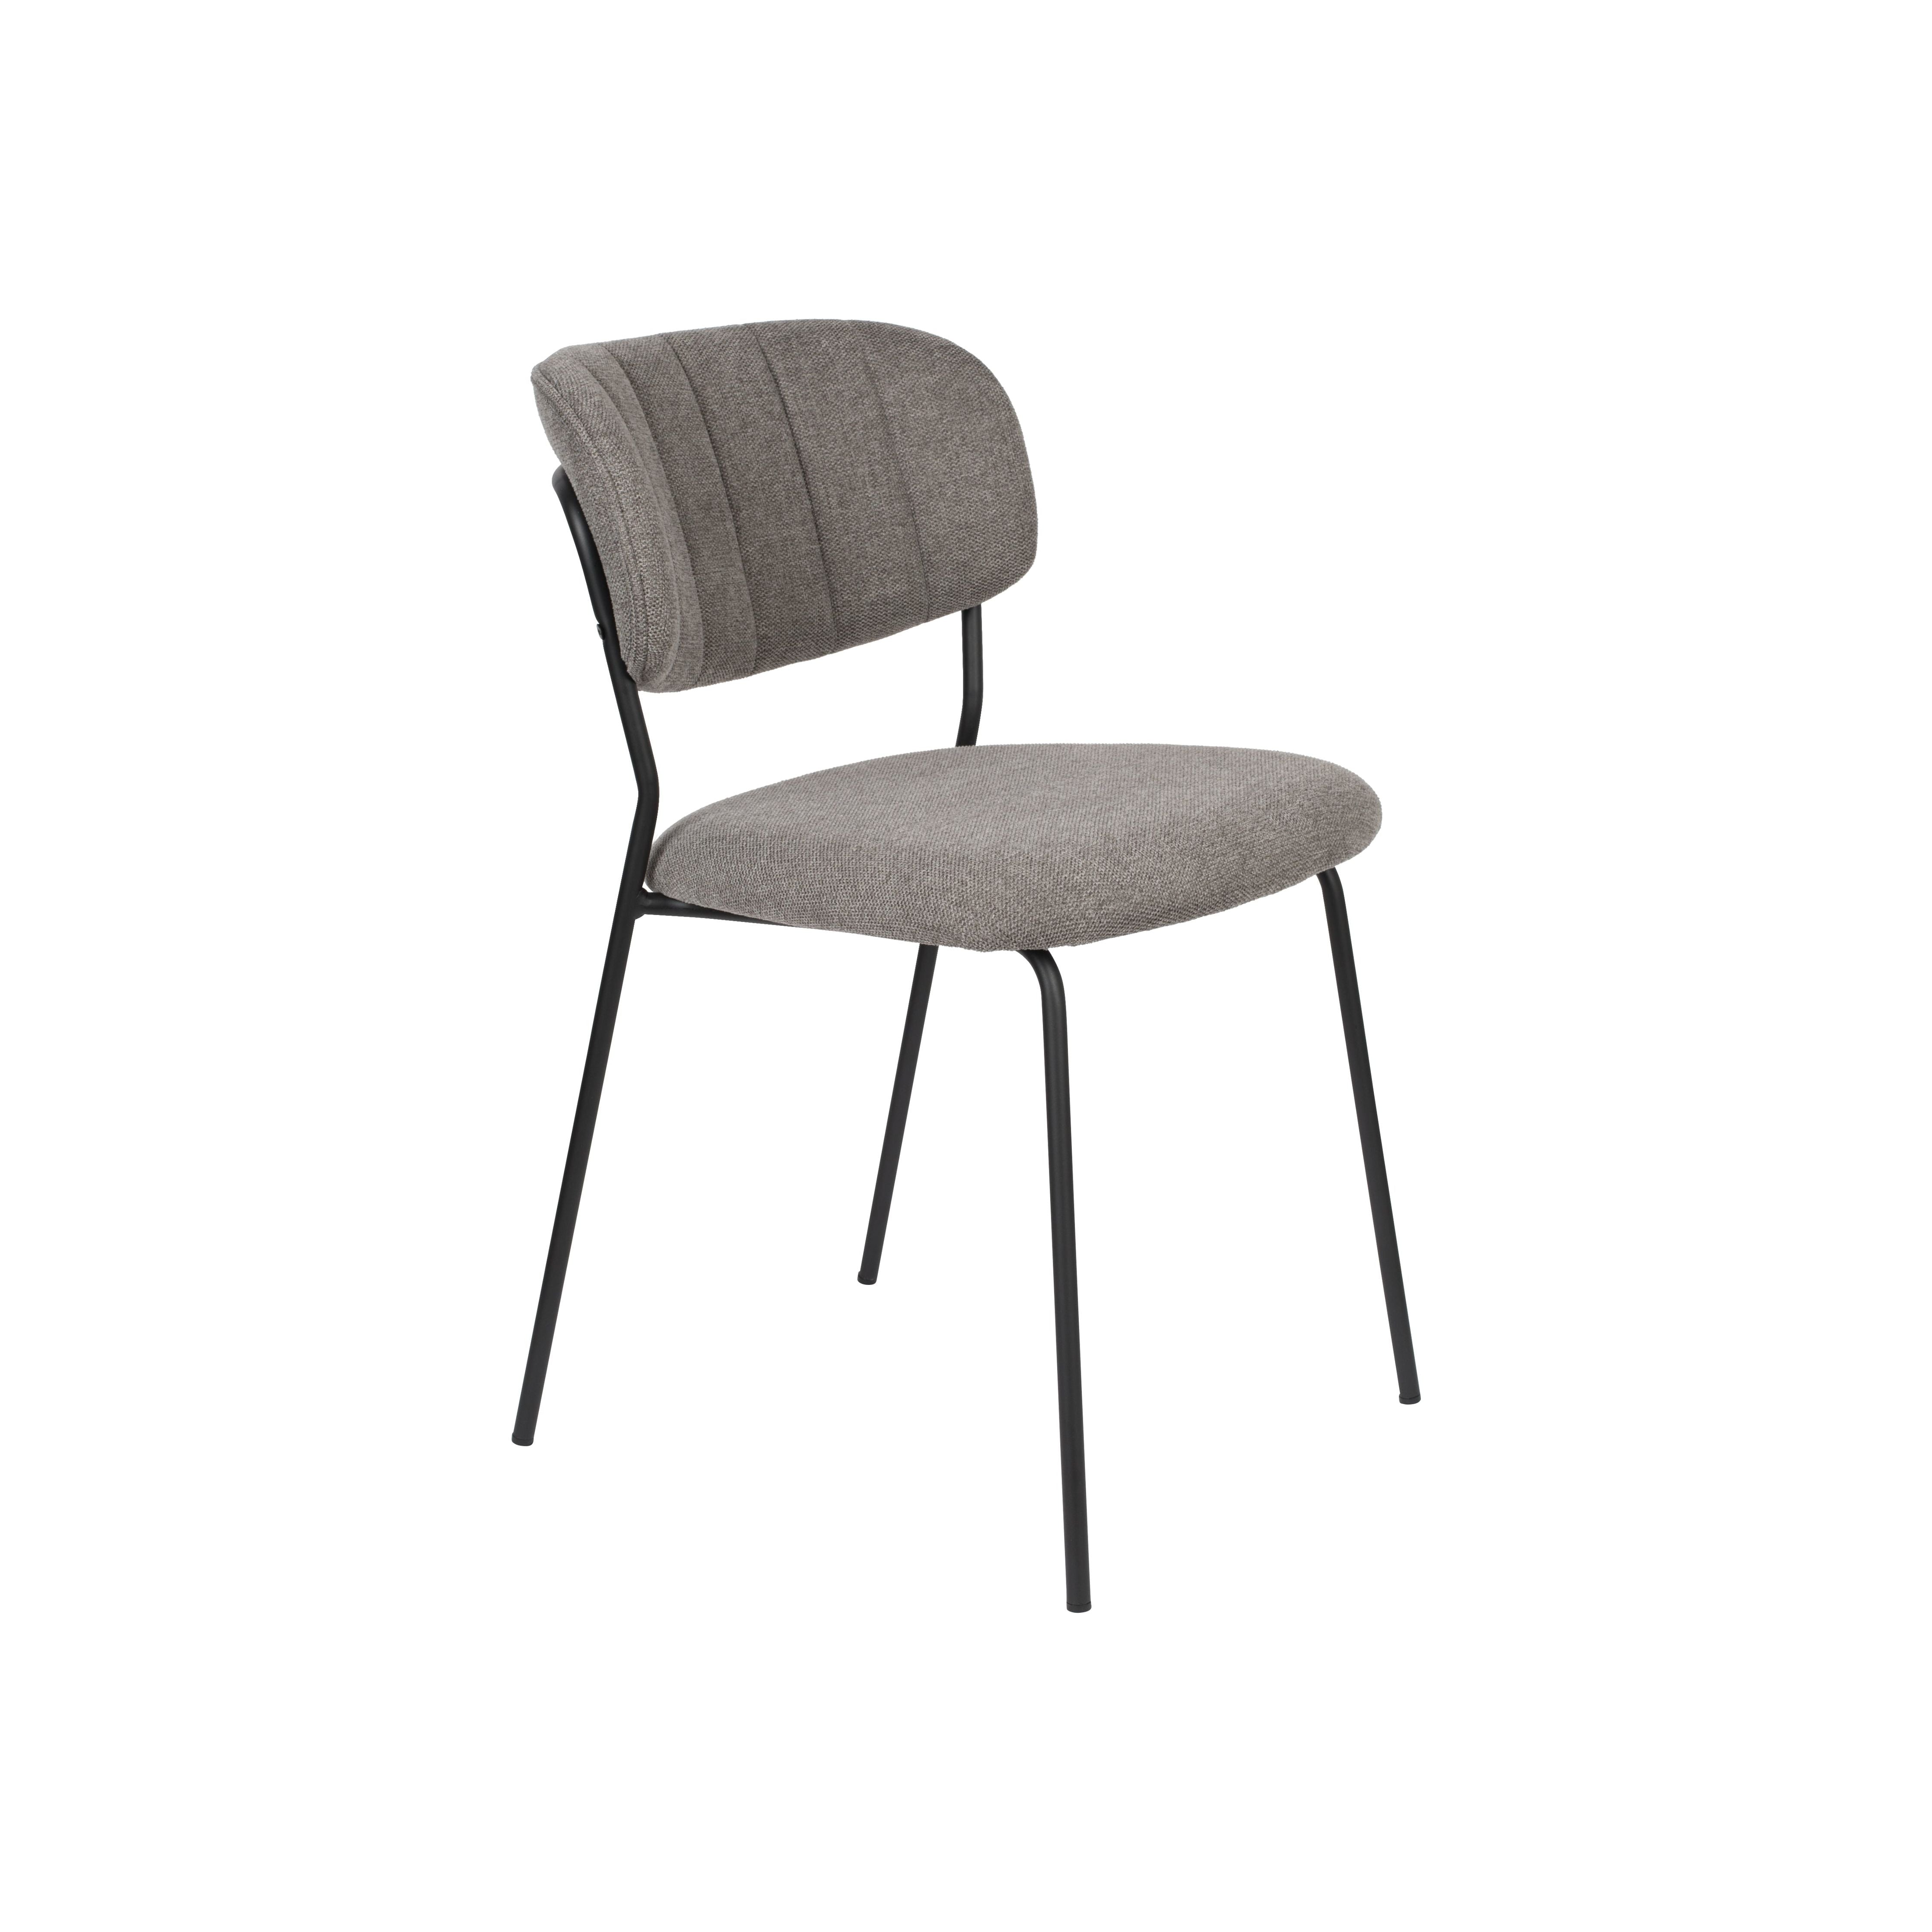 Chair jolien black/grey